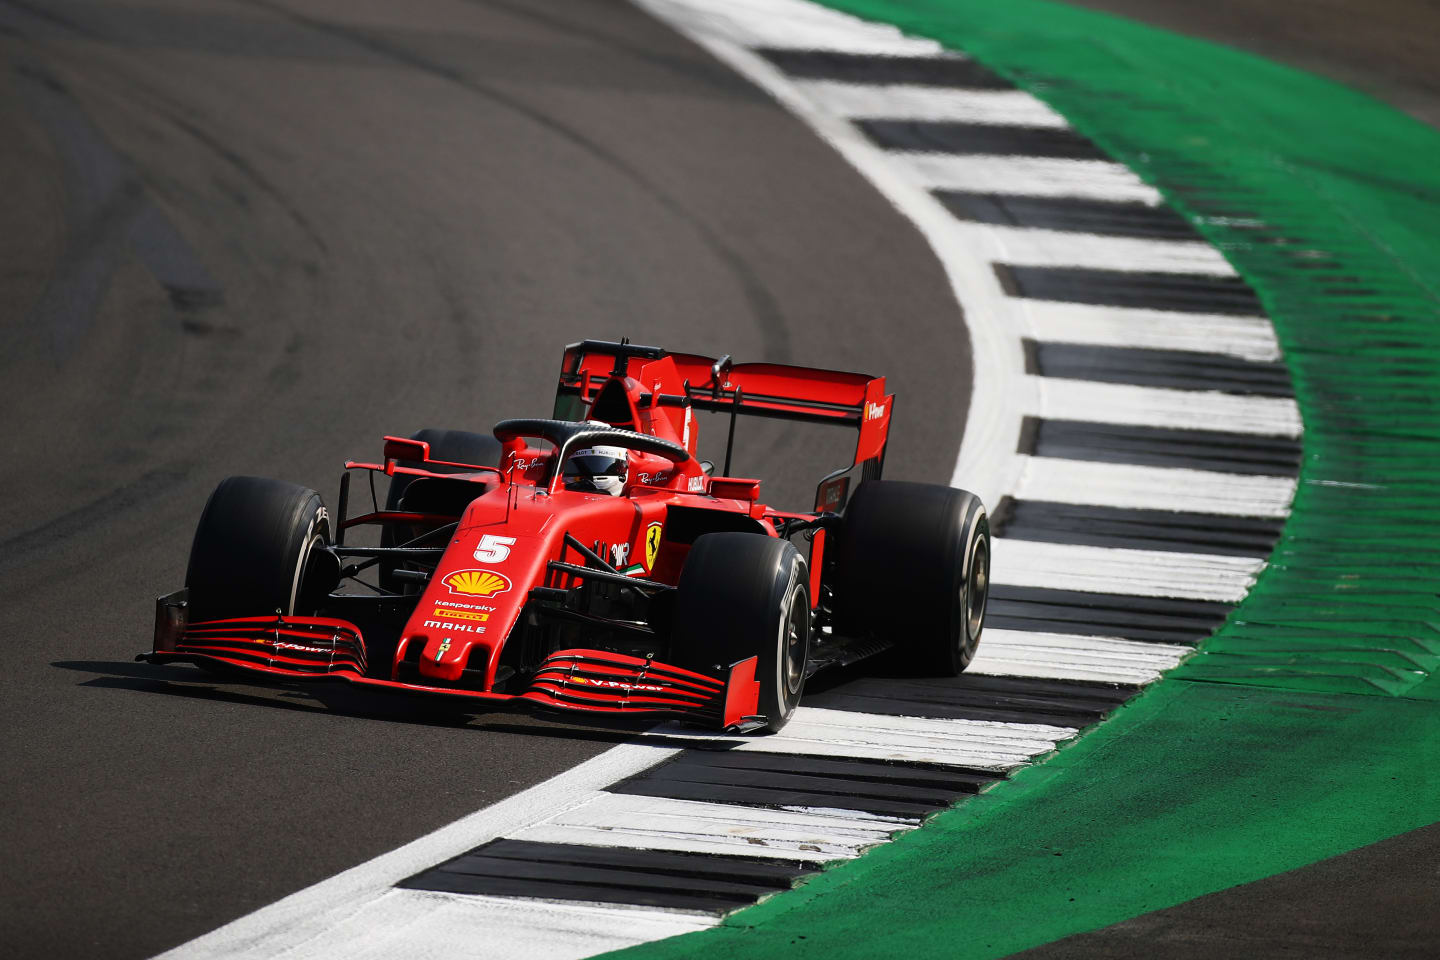 NORTHAMPTON, ENGLAND - AUGUST 09: Sebastian Vettel of Germany driving the (5) Scuderia Ferrari